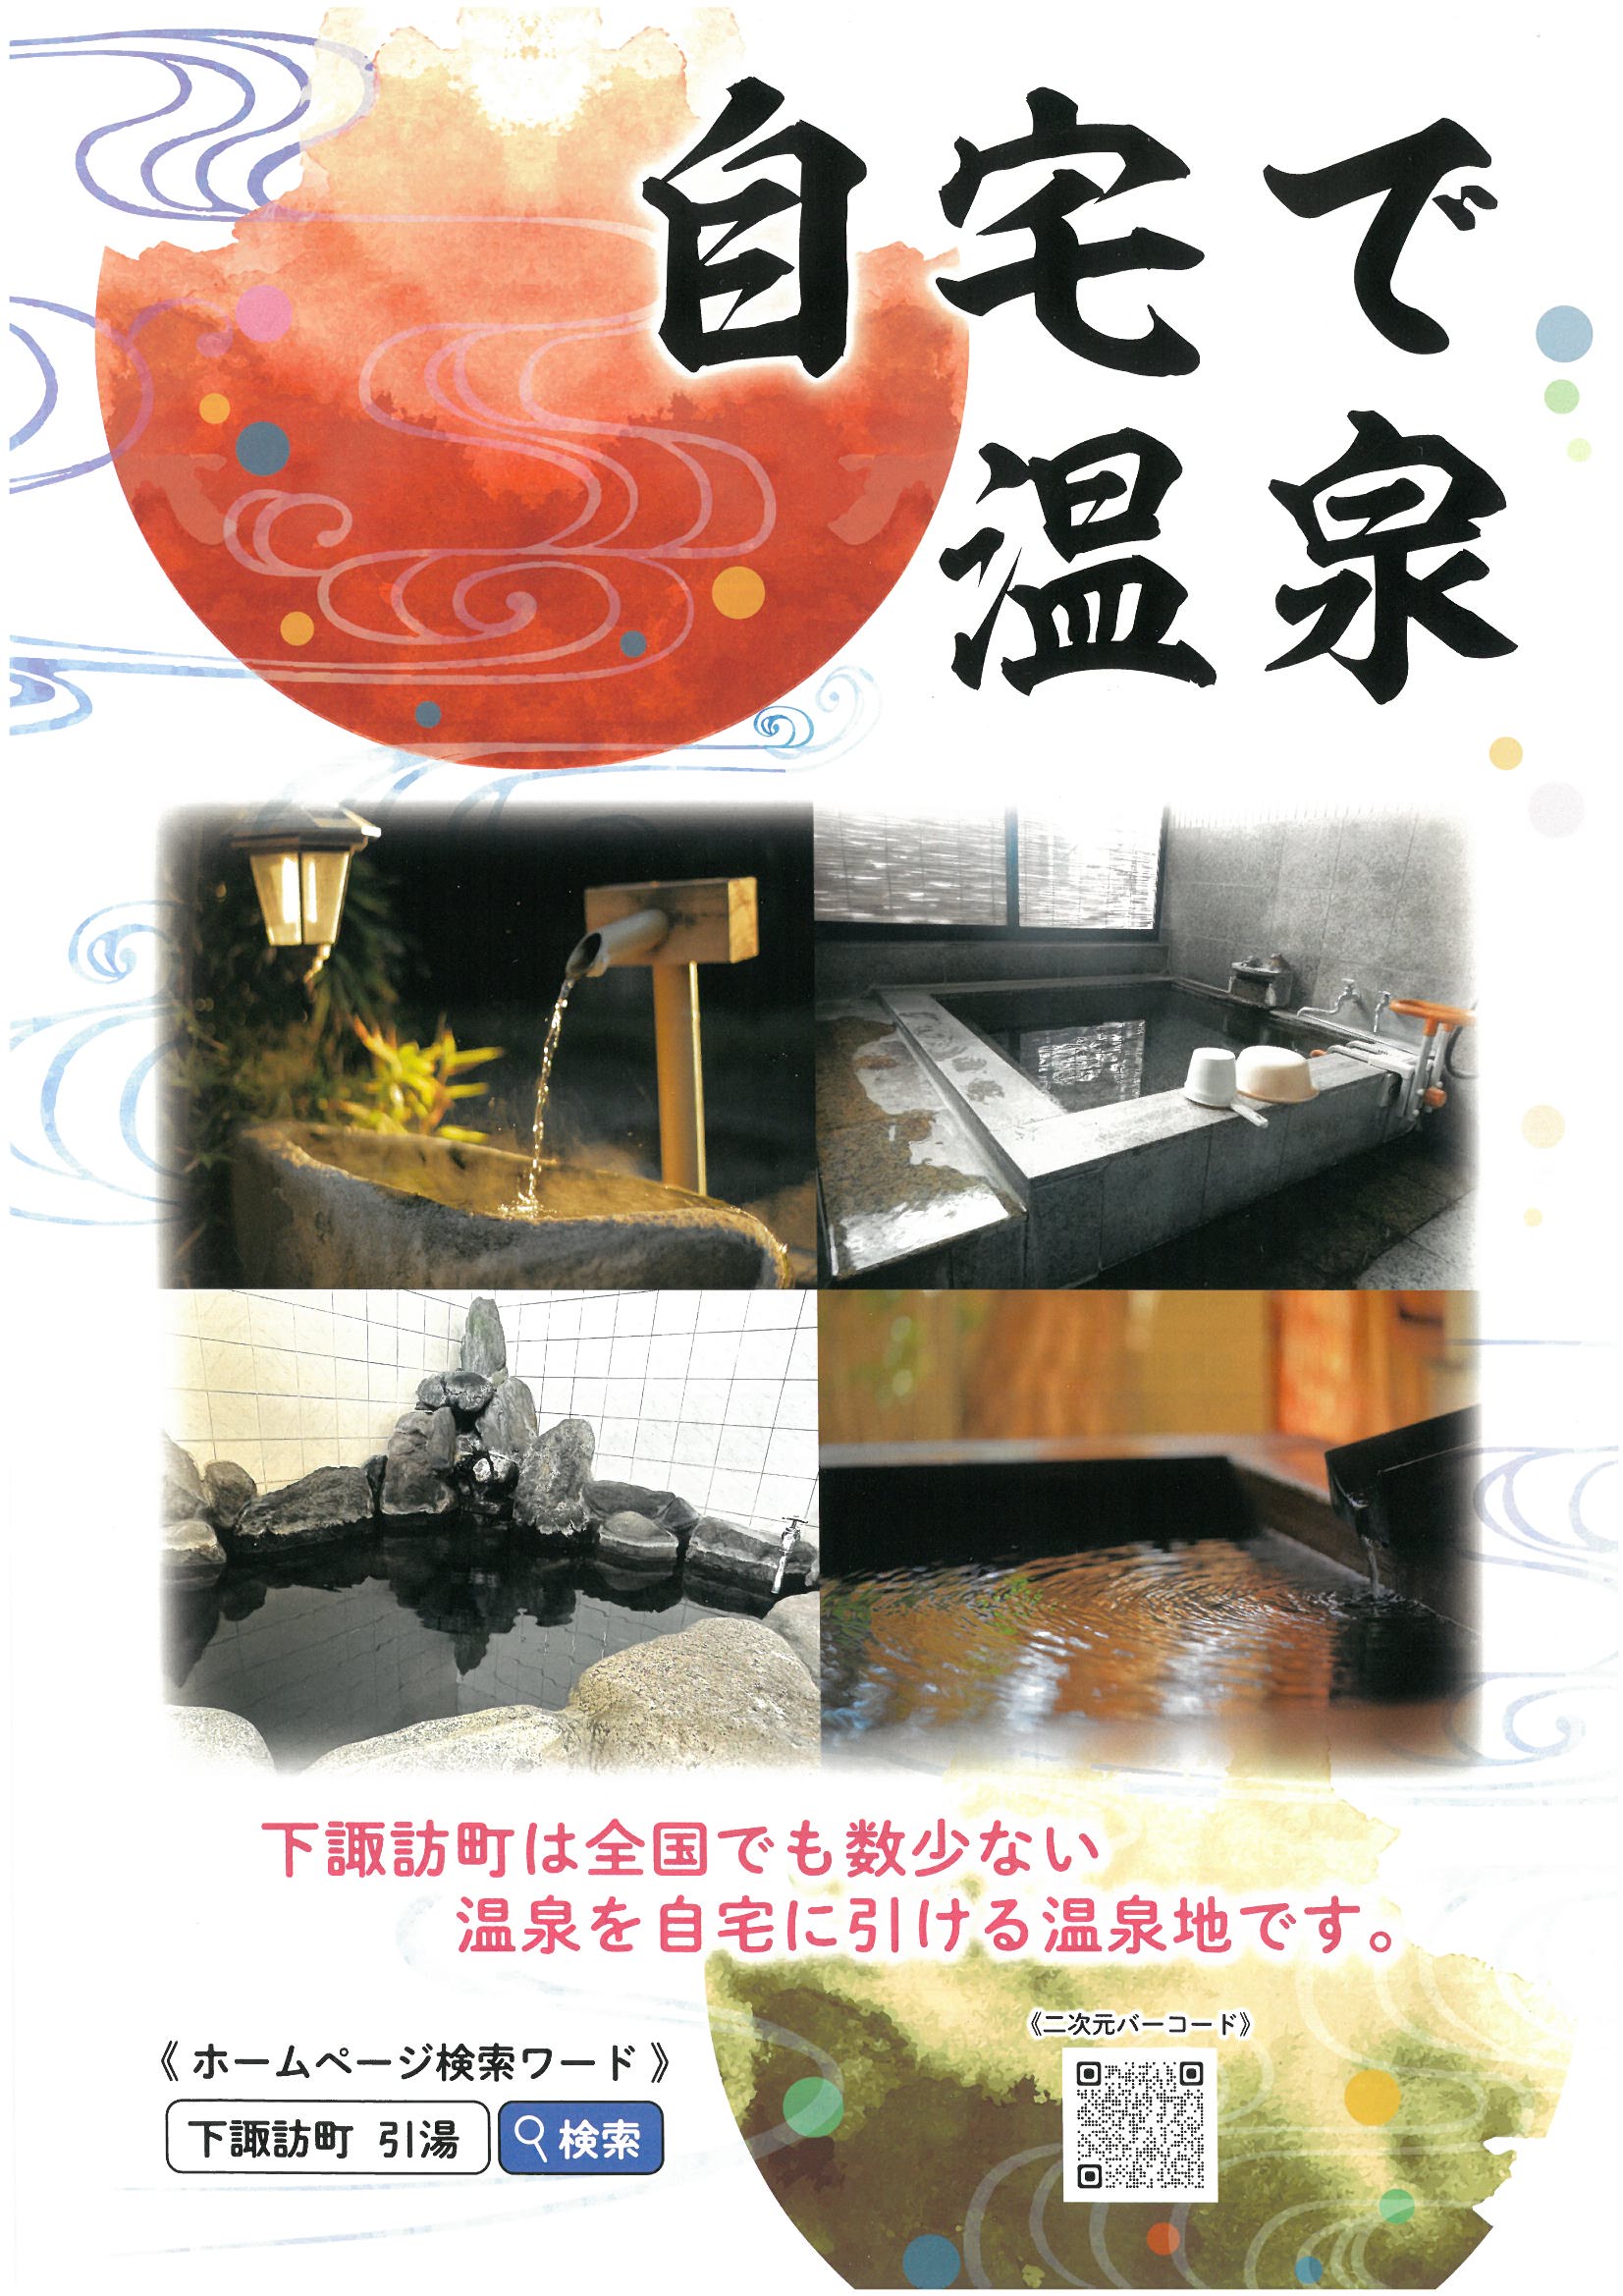 onsen-leaflet